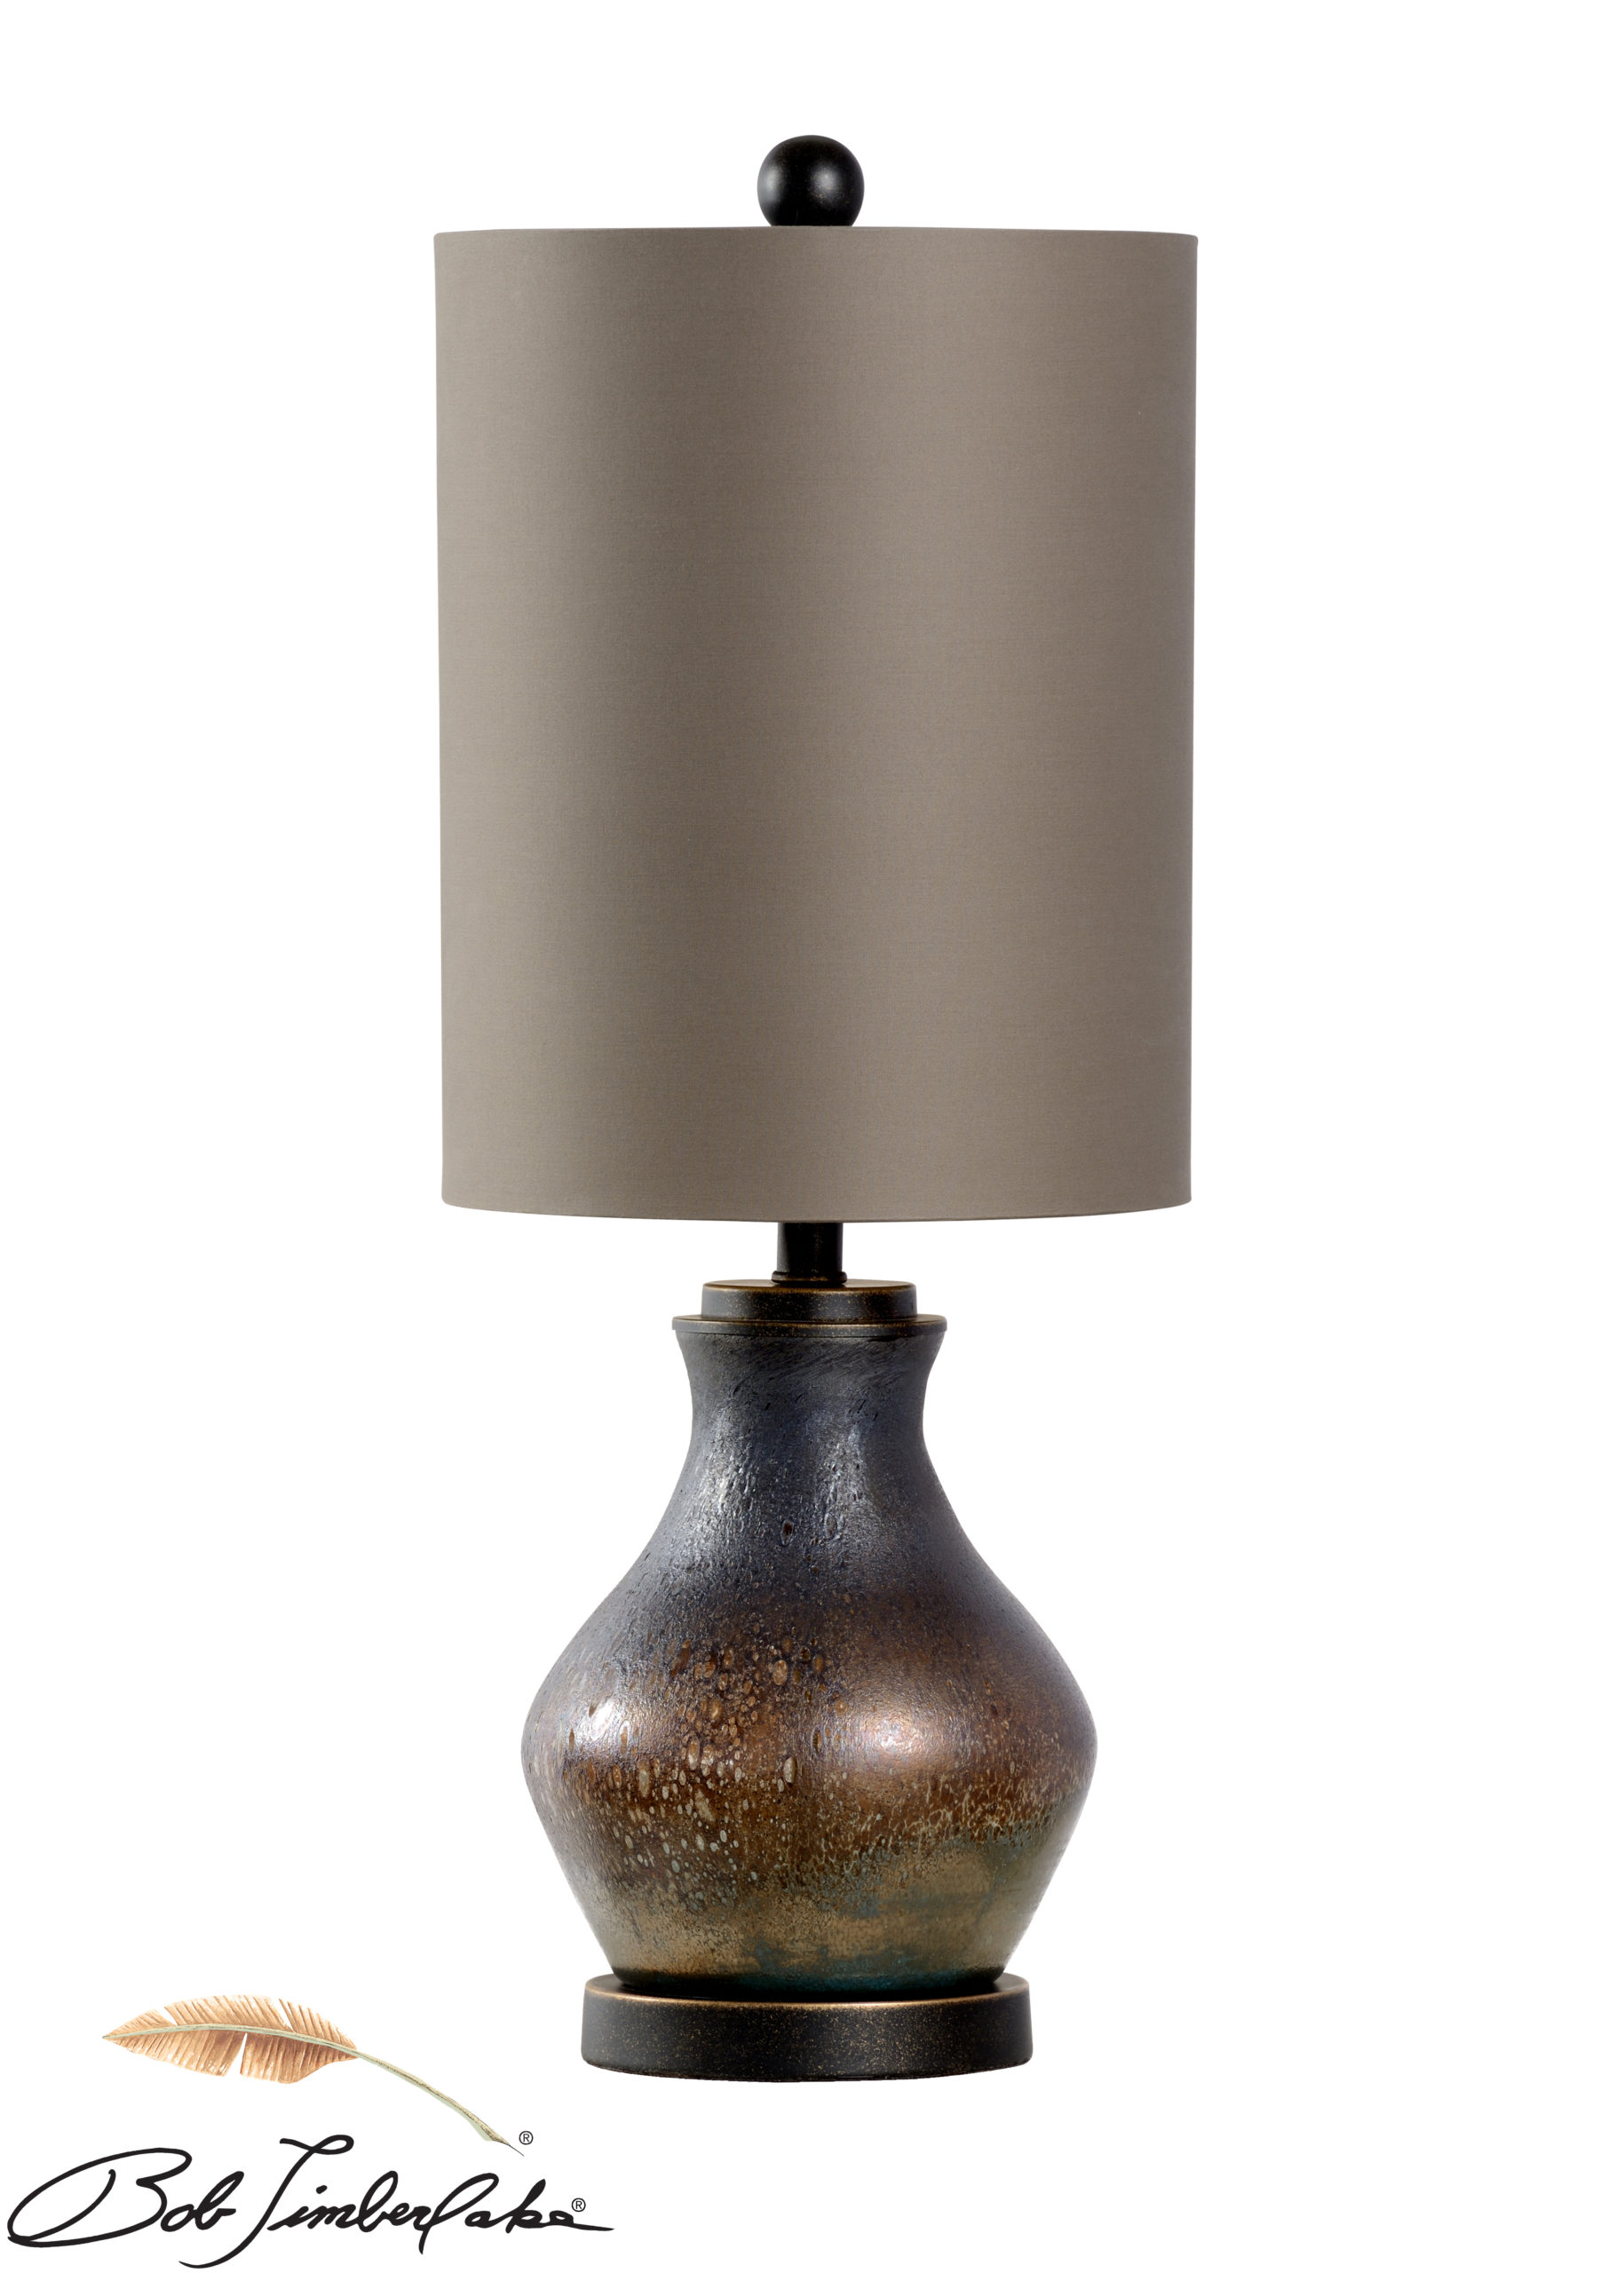 Stoneridge Lamp